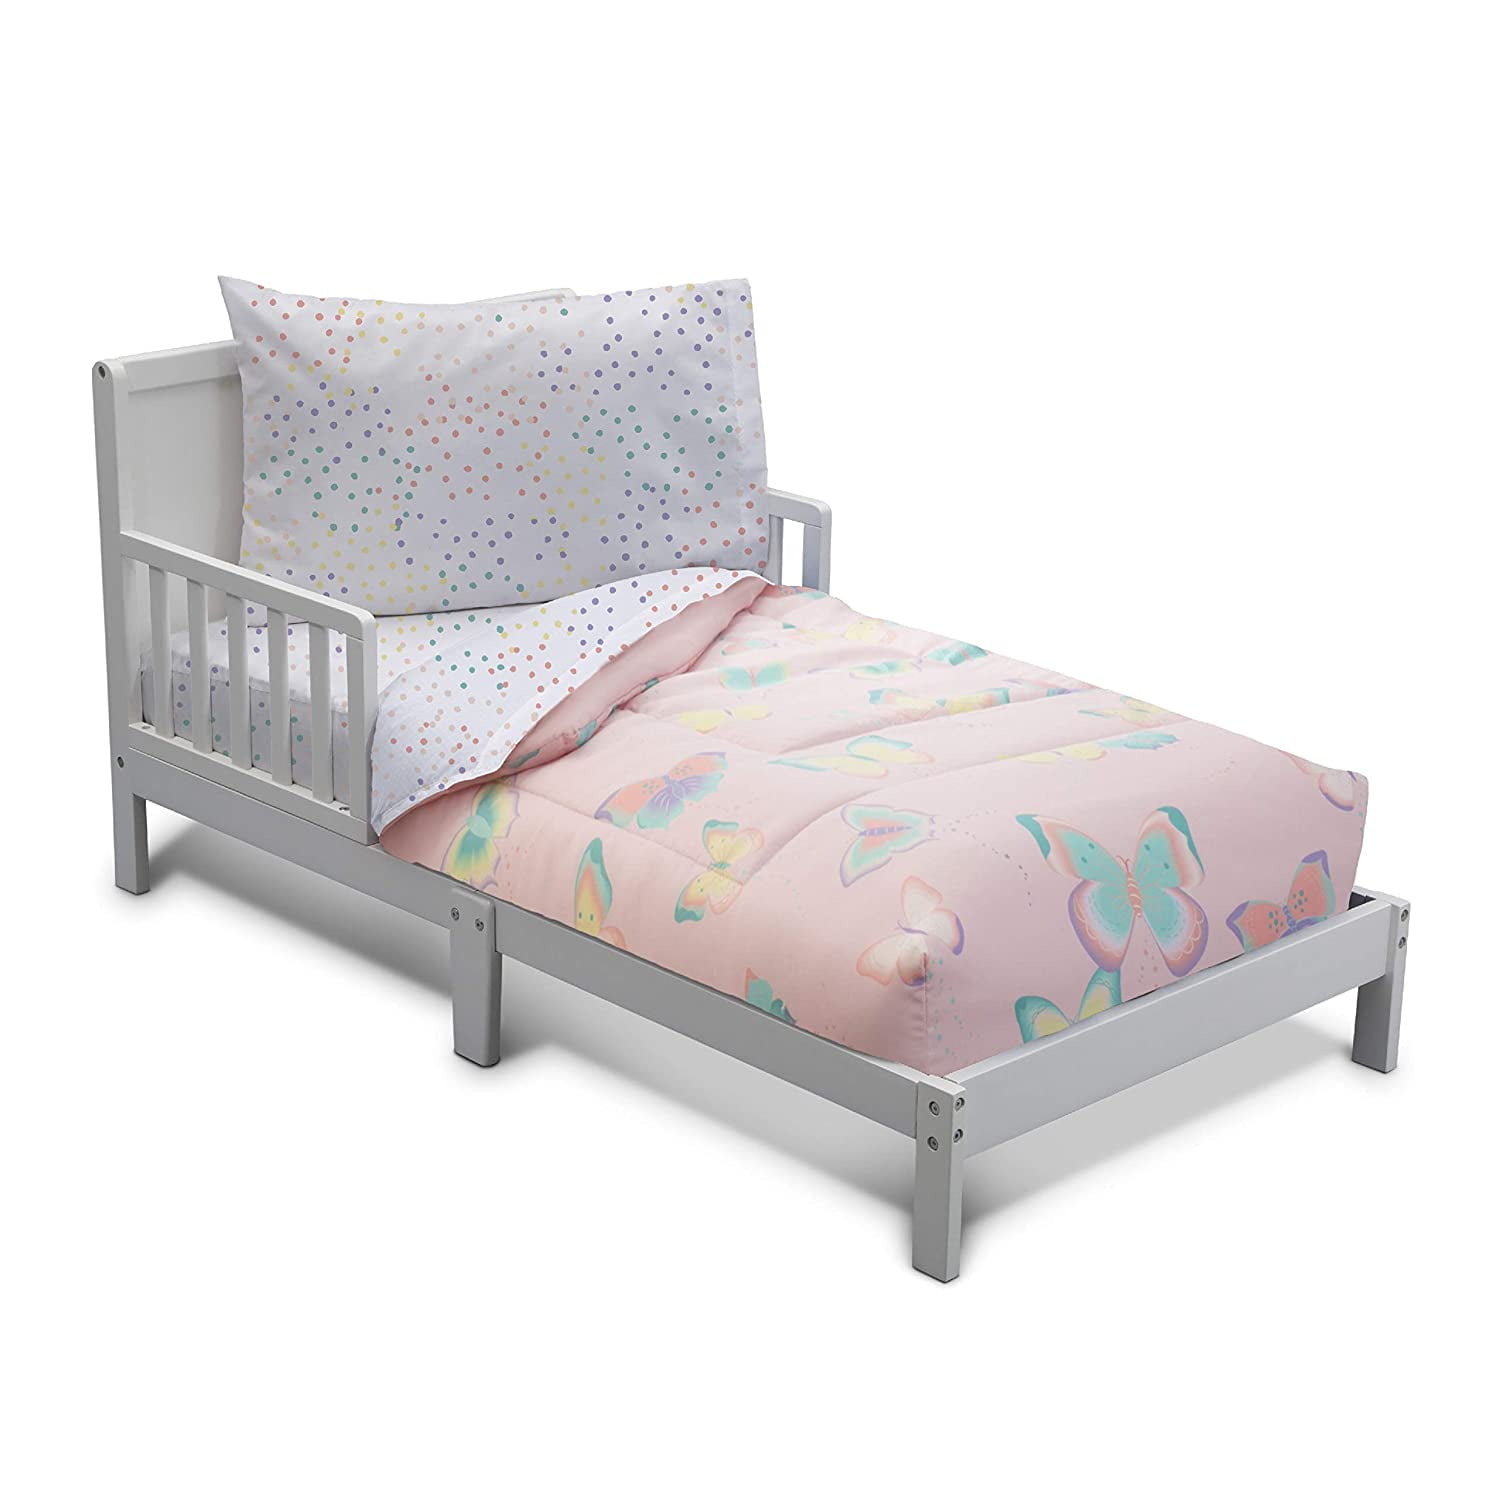 Delta Children 4-Piece Girls Toddler Bedding Set Collection | Includes: Fitted Sheet, Flat Top Sheet w/ Elastic Bottom, Fitted Comforter w/ Elastic Bottom, Pillowcase | Flutter| Pink